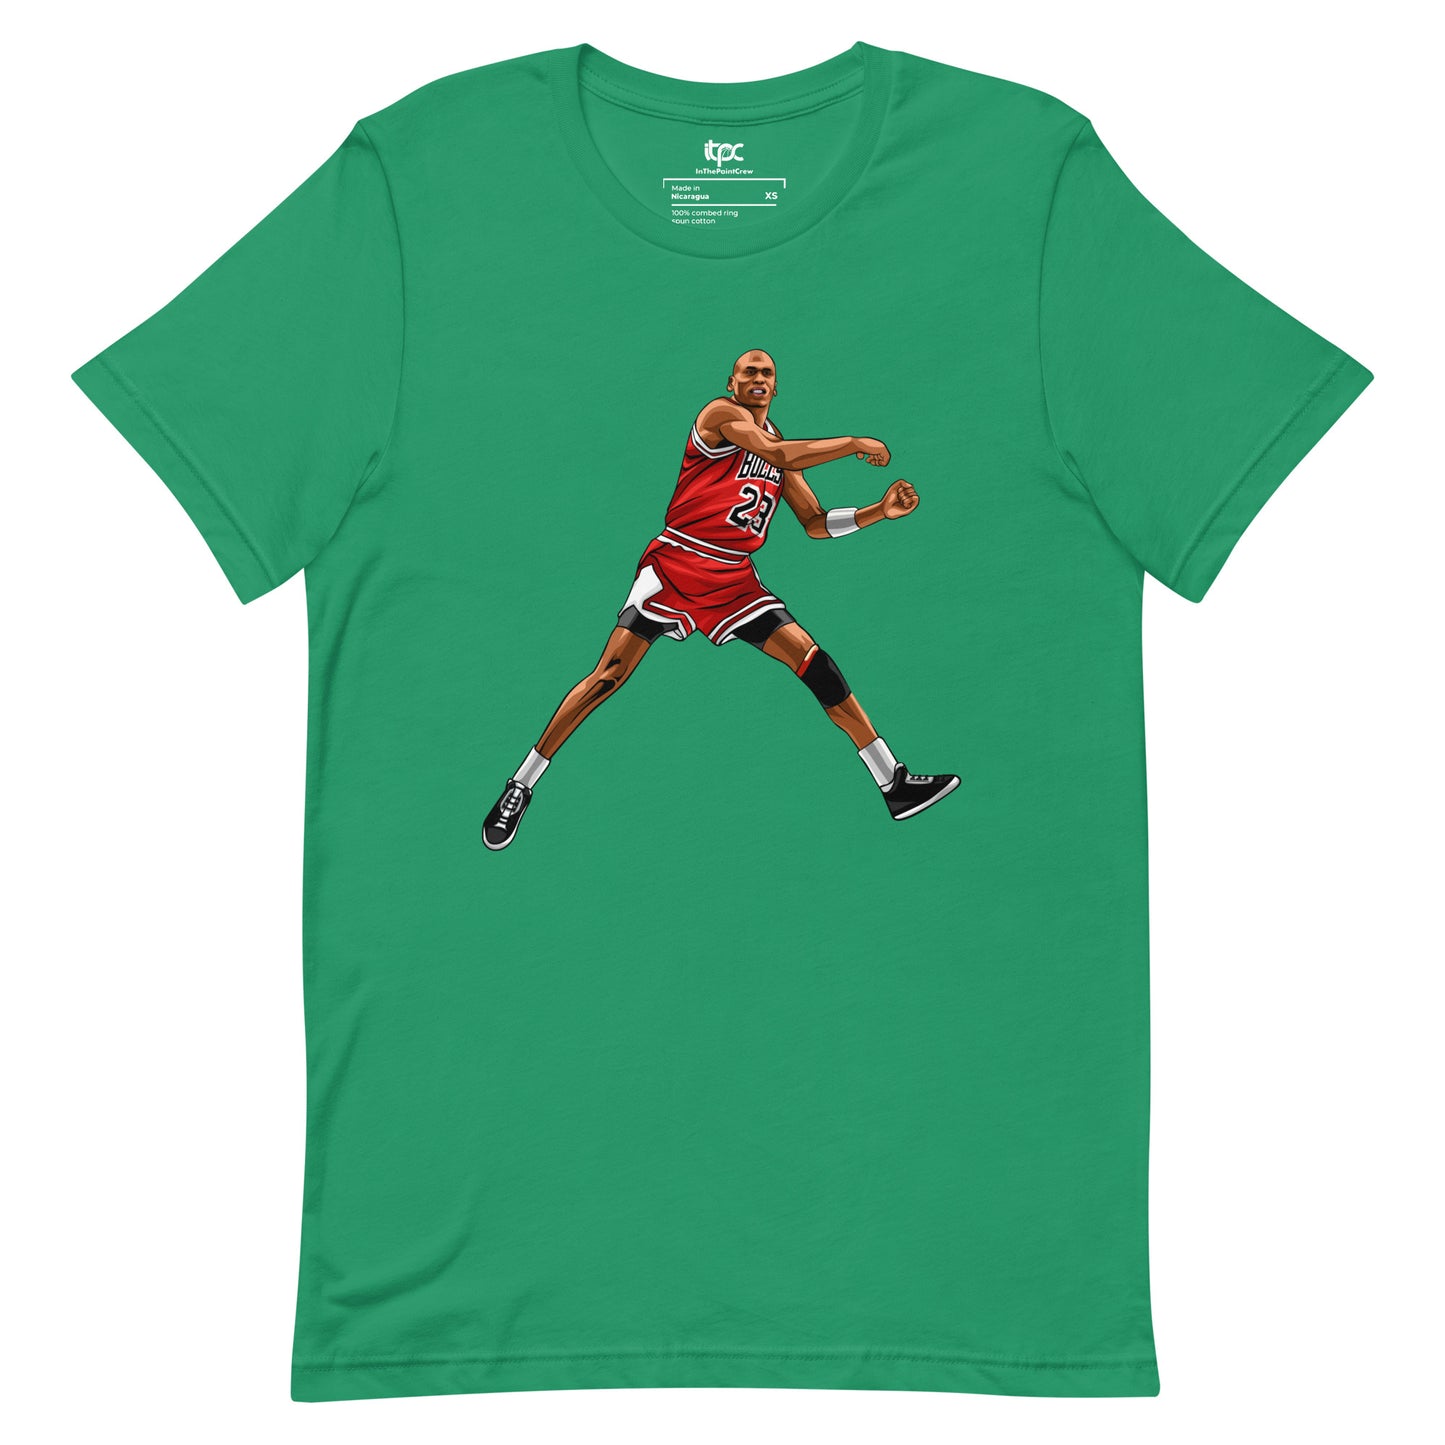 Michael Jordan - "The Shot" t-shirt